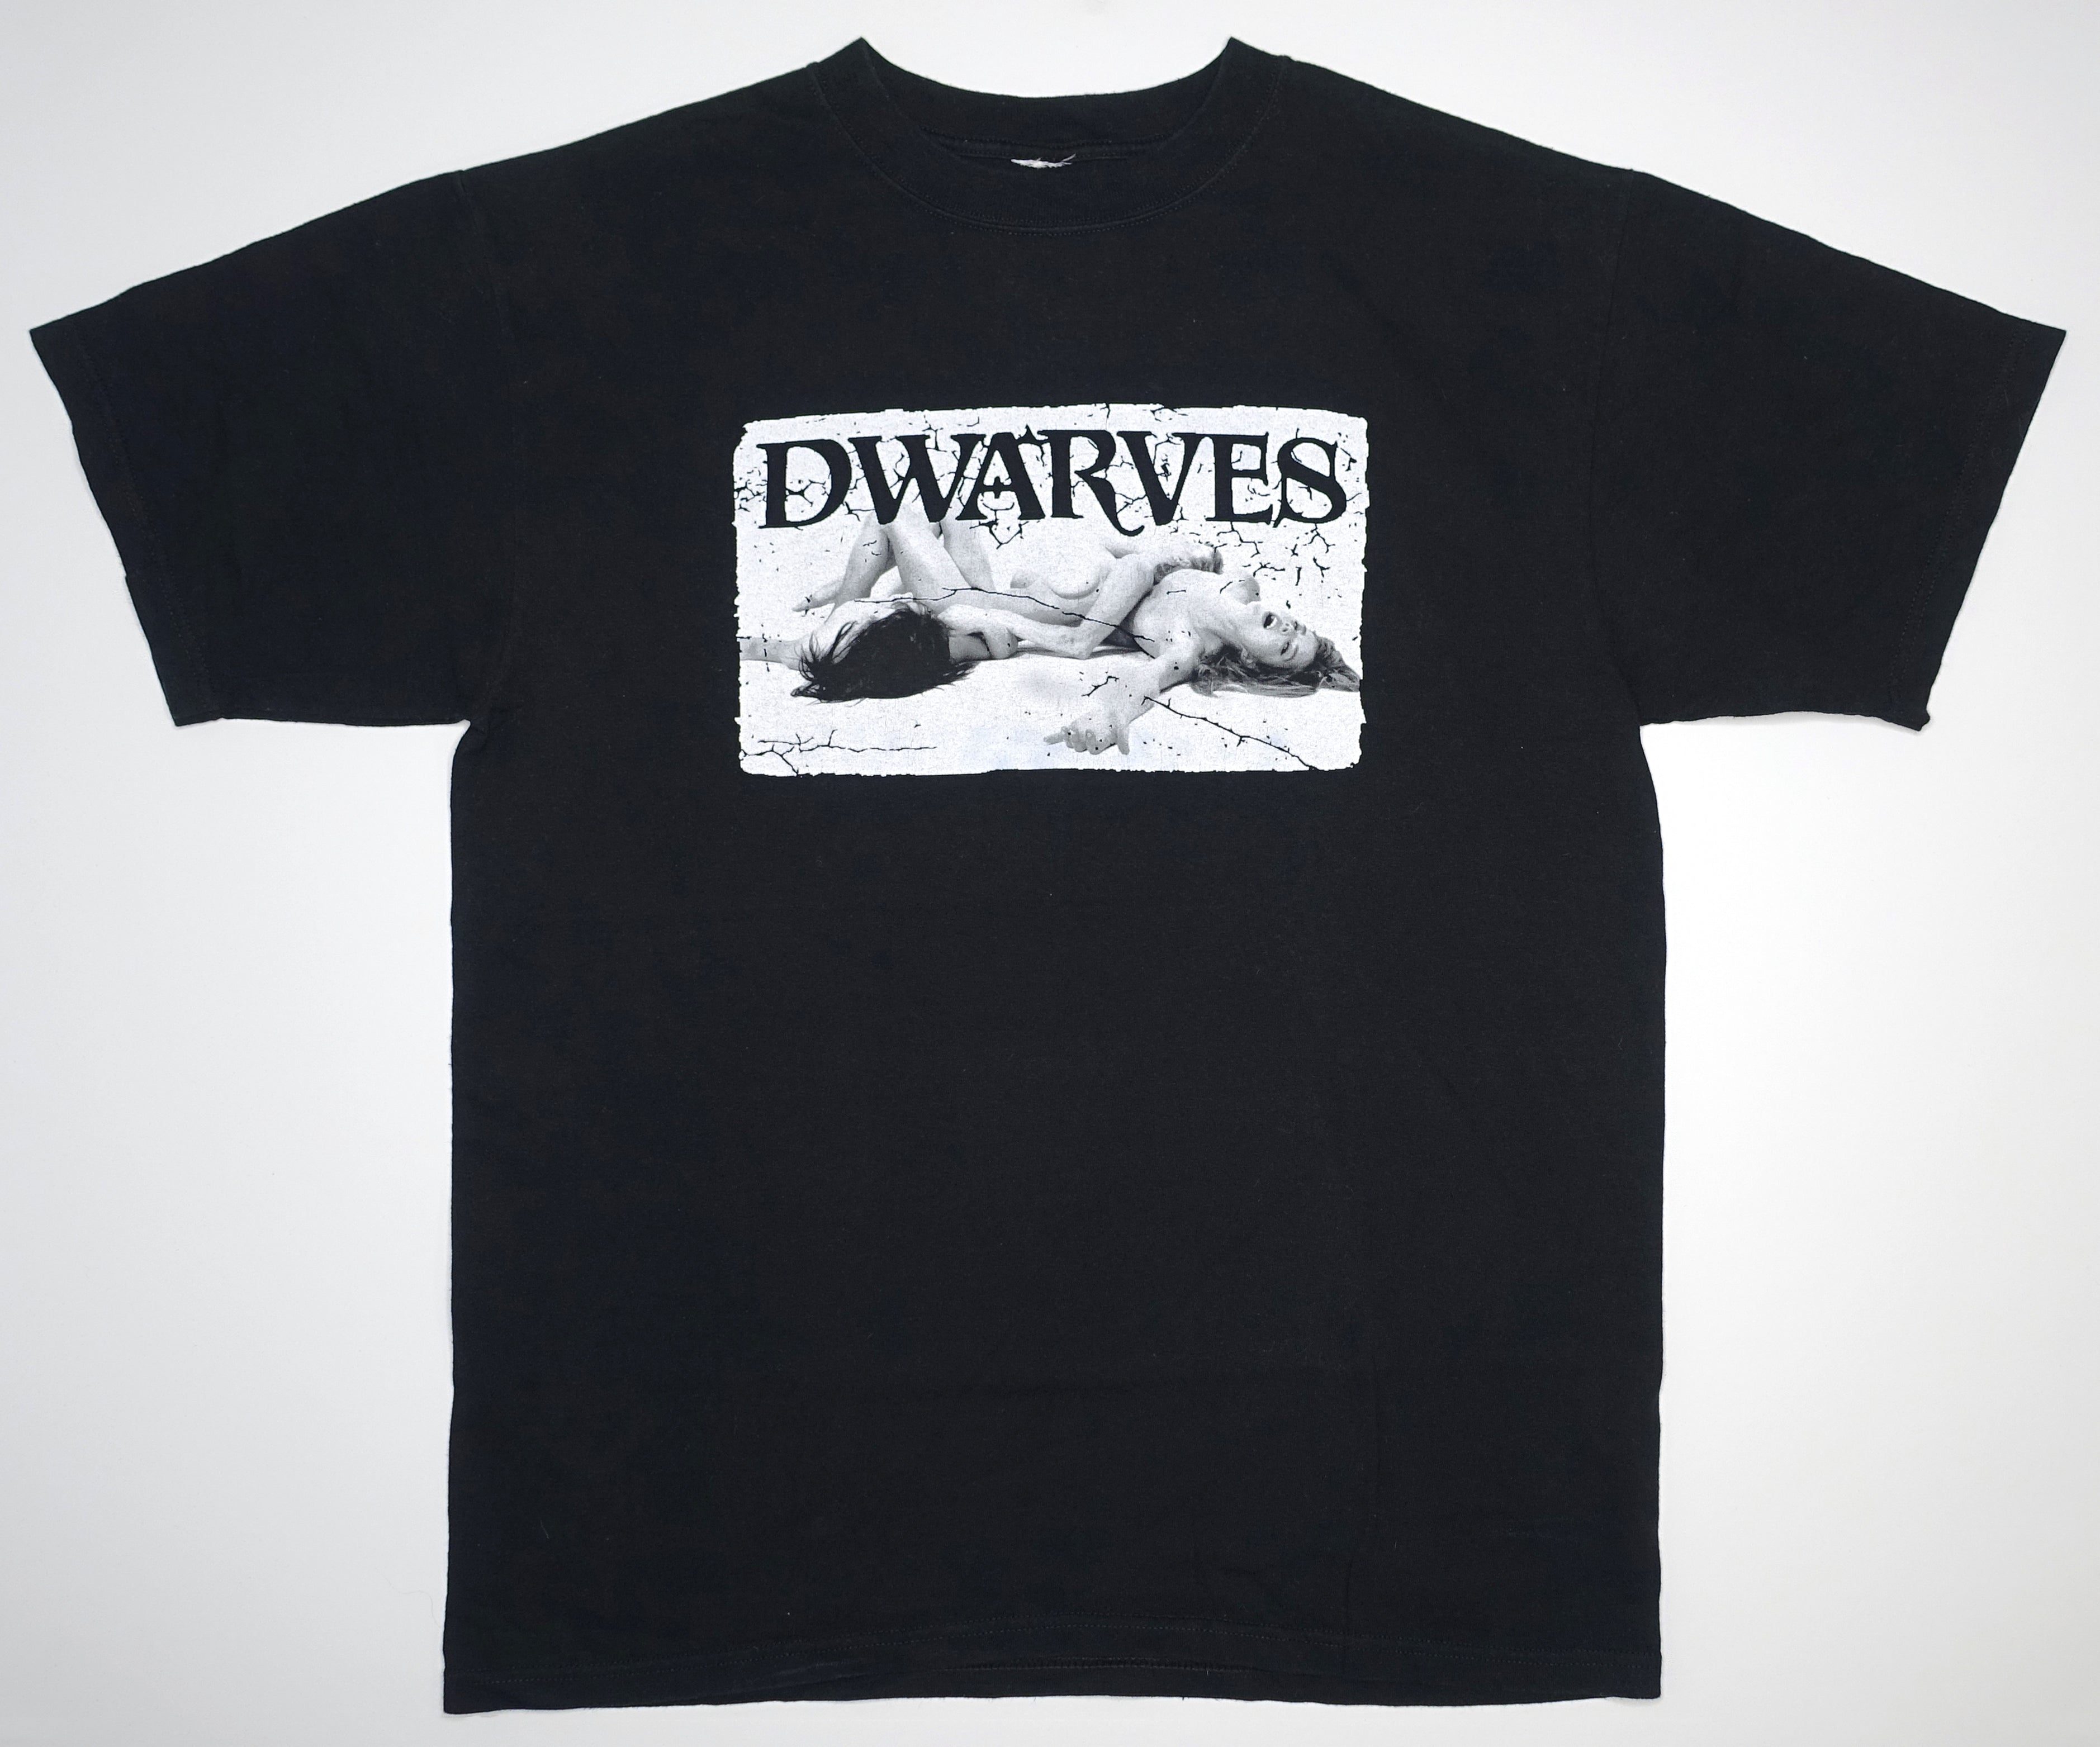 Dwarves - Demented Relentless Unrepentant Tour Shirt Size Large